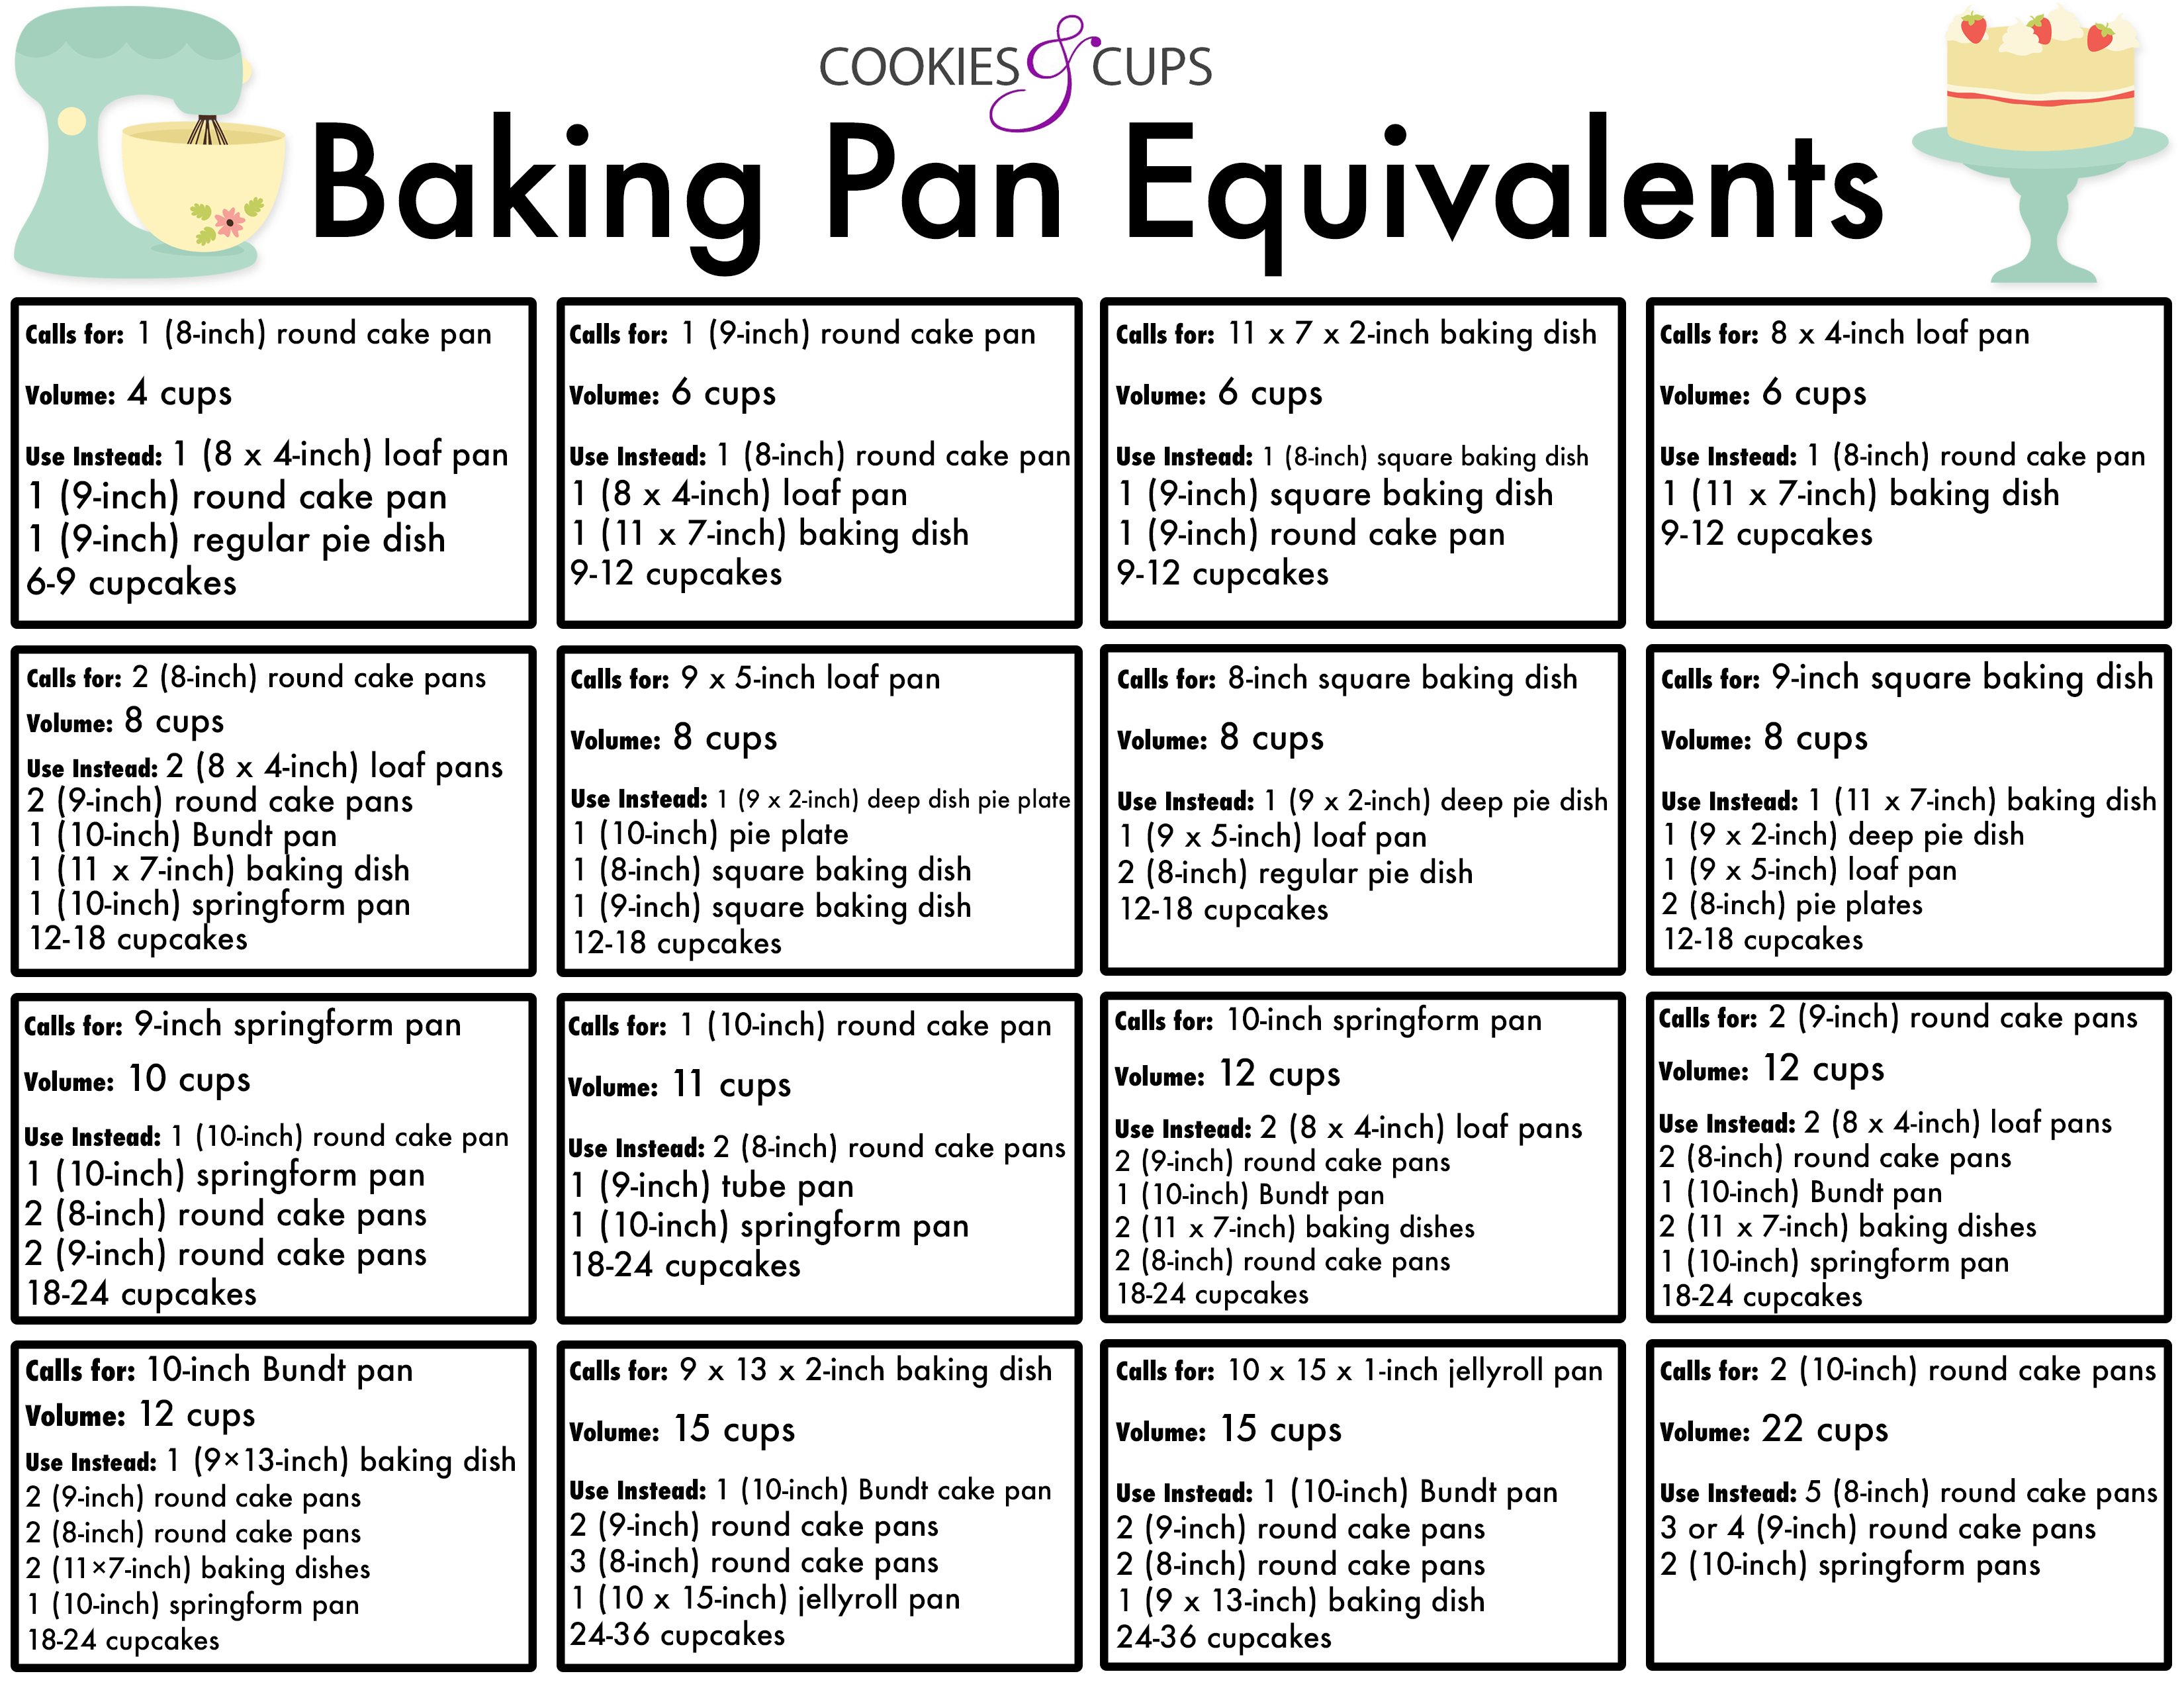 Baking Pan Equivalents (Pan Volume)